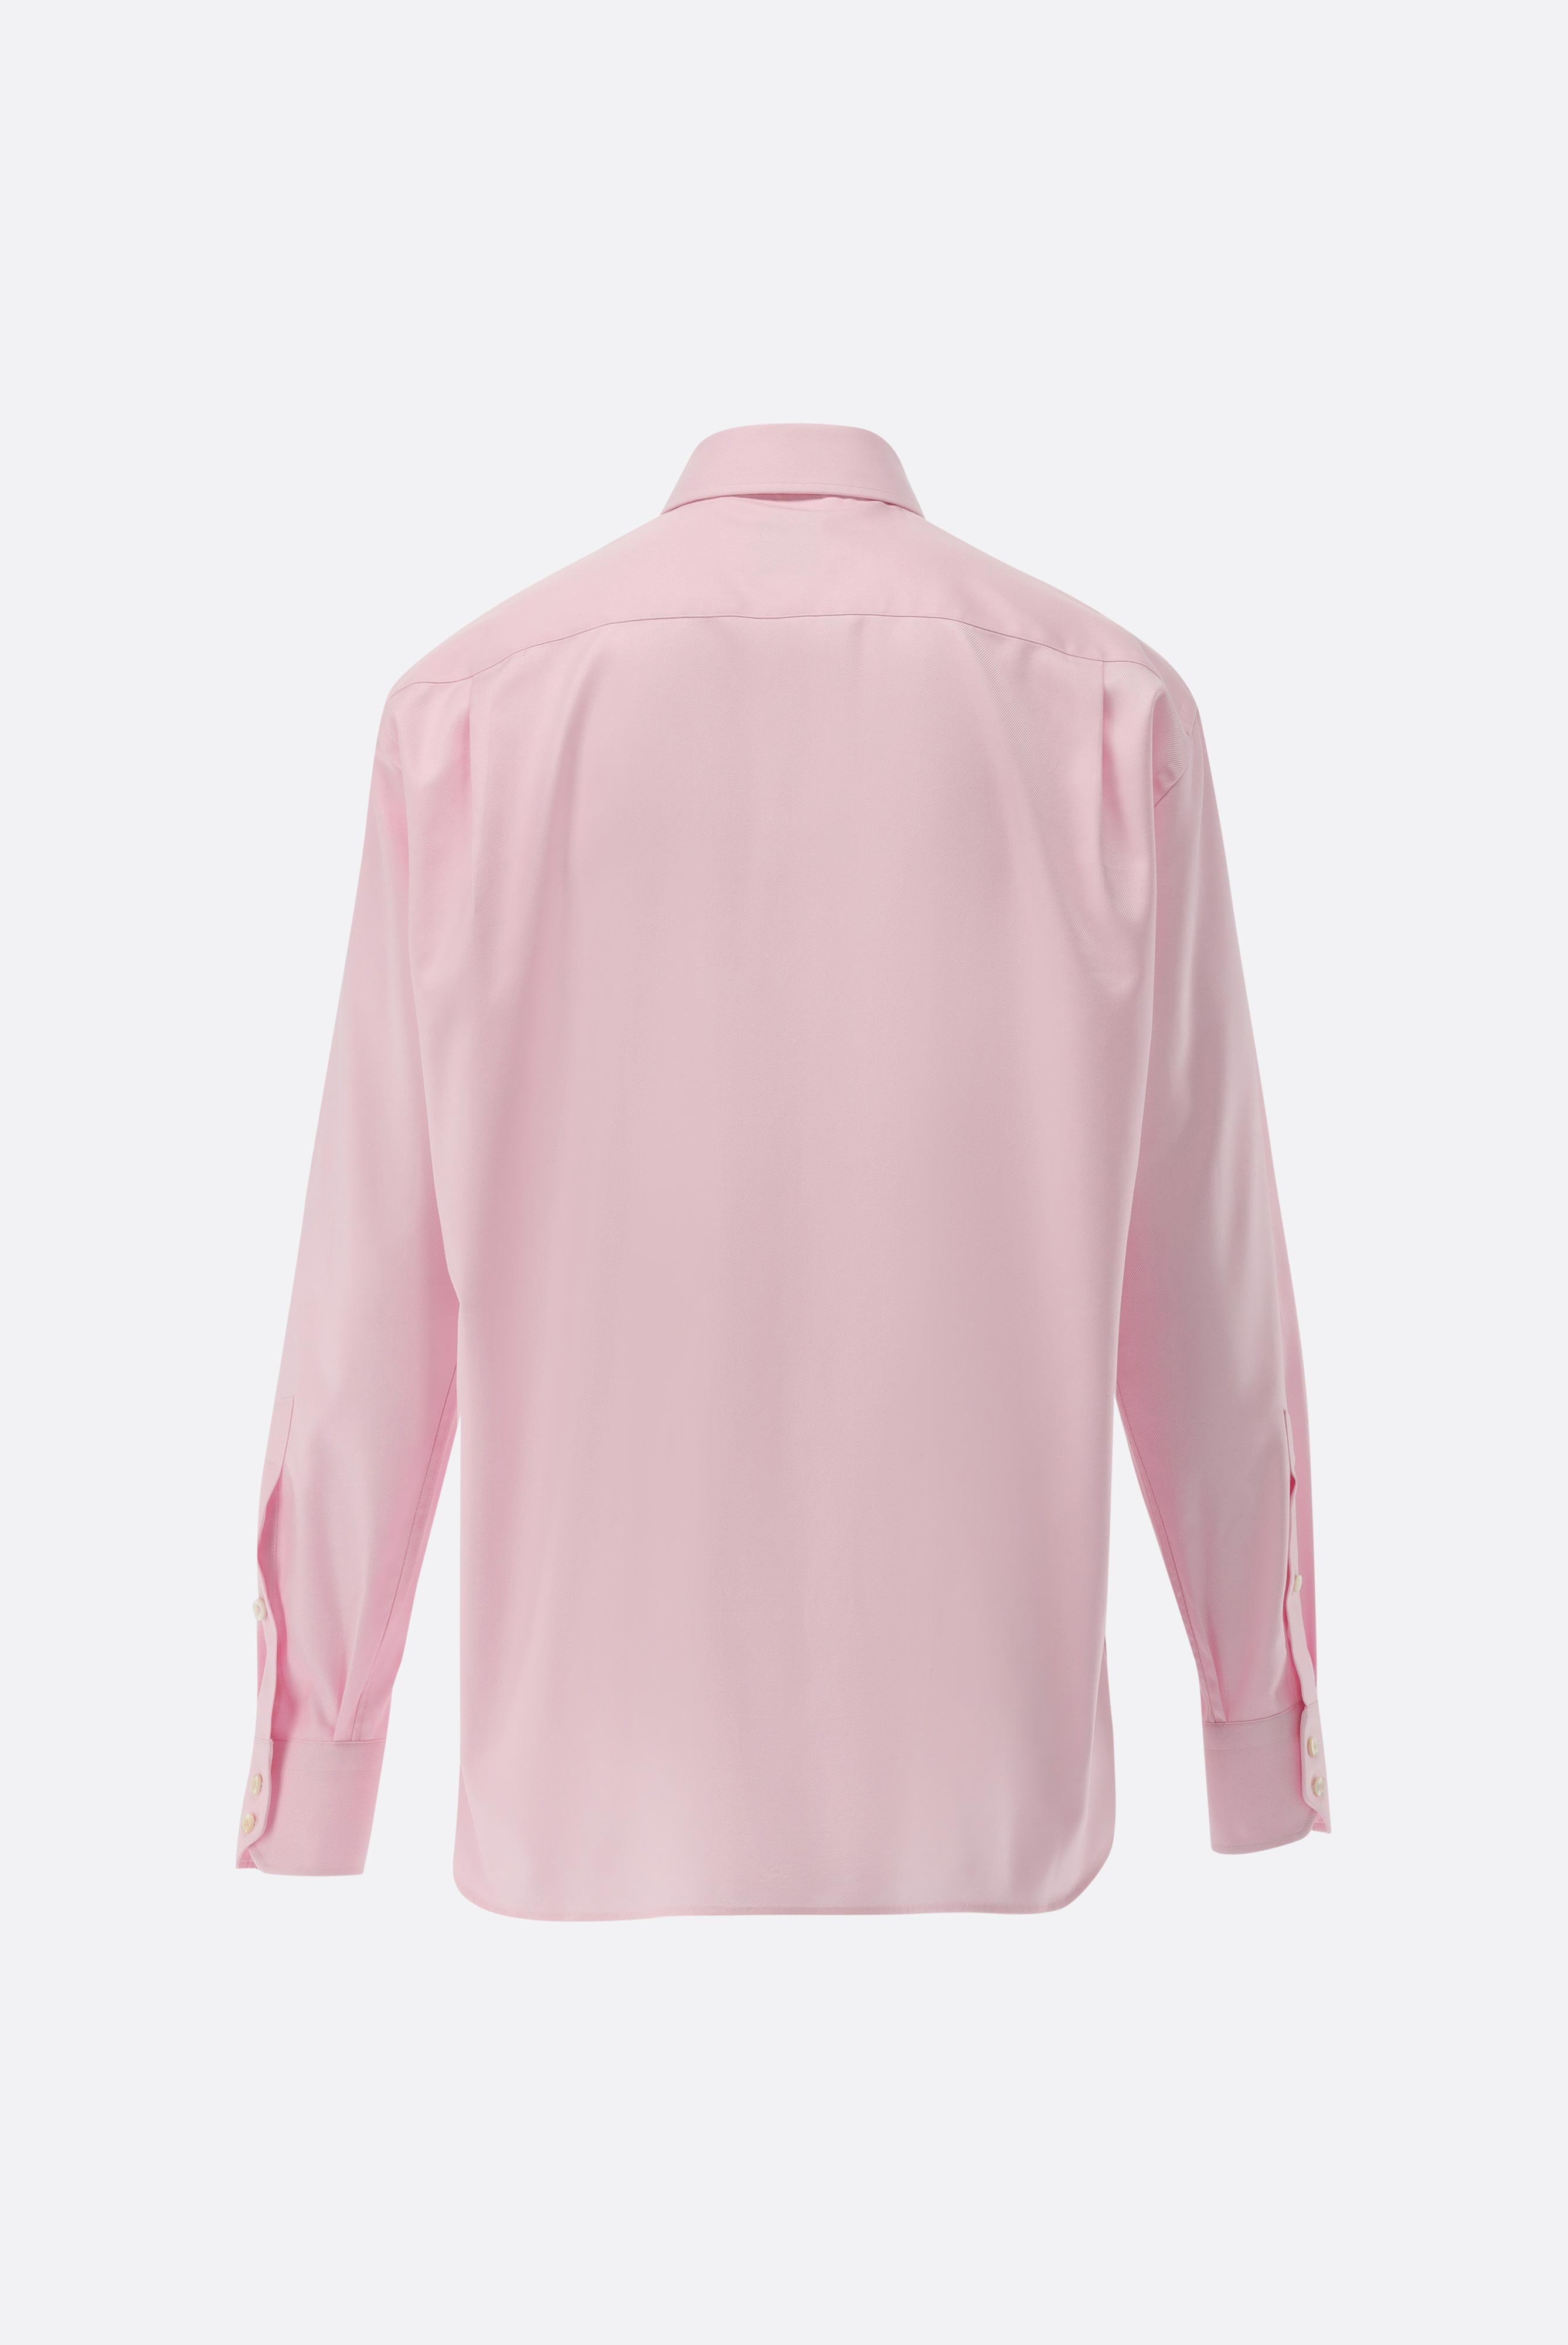 Comfort-Fit Hemden+Bügelfreies Businesshemd Comfort Fit+20.2021.BQ.150130.520.40